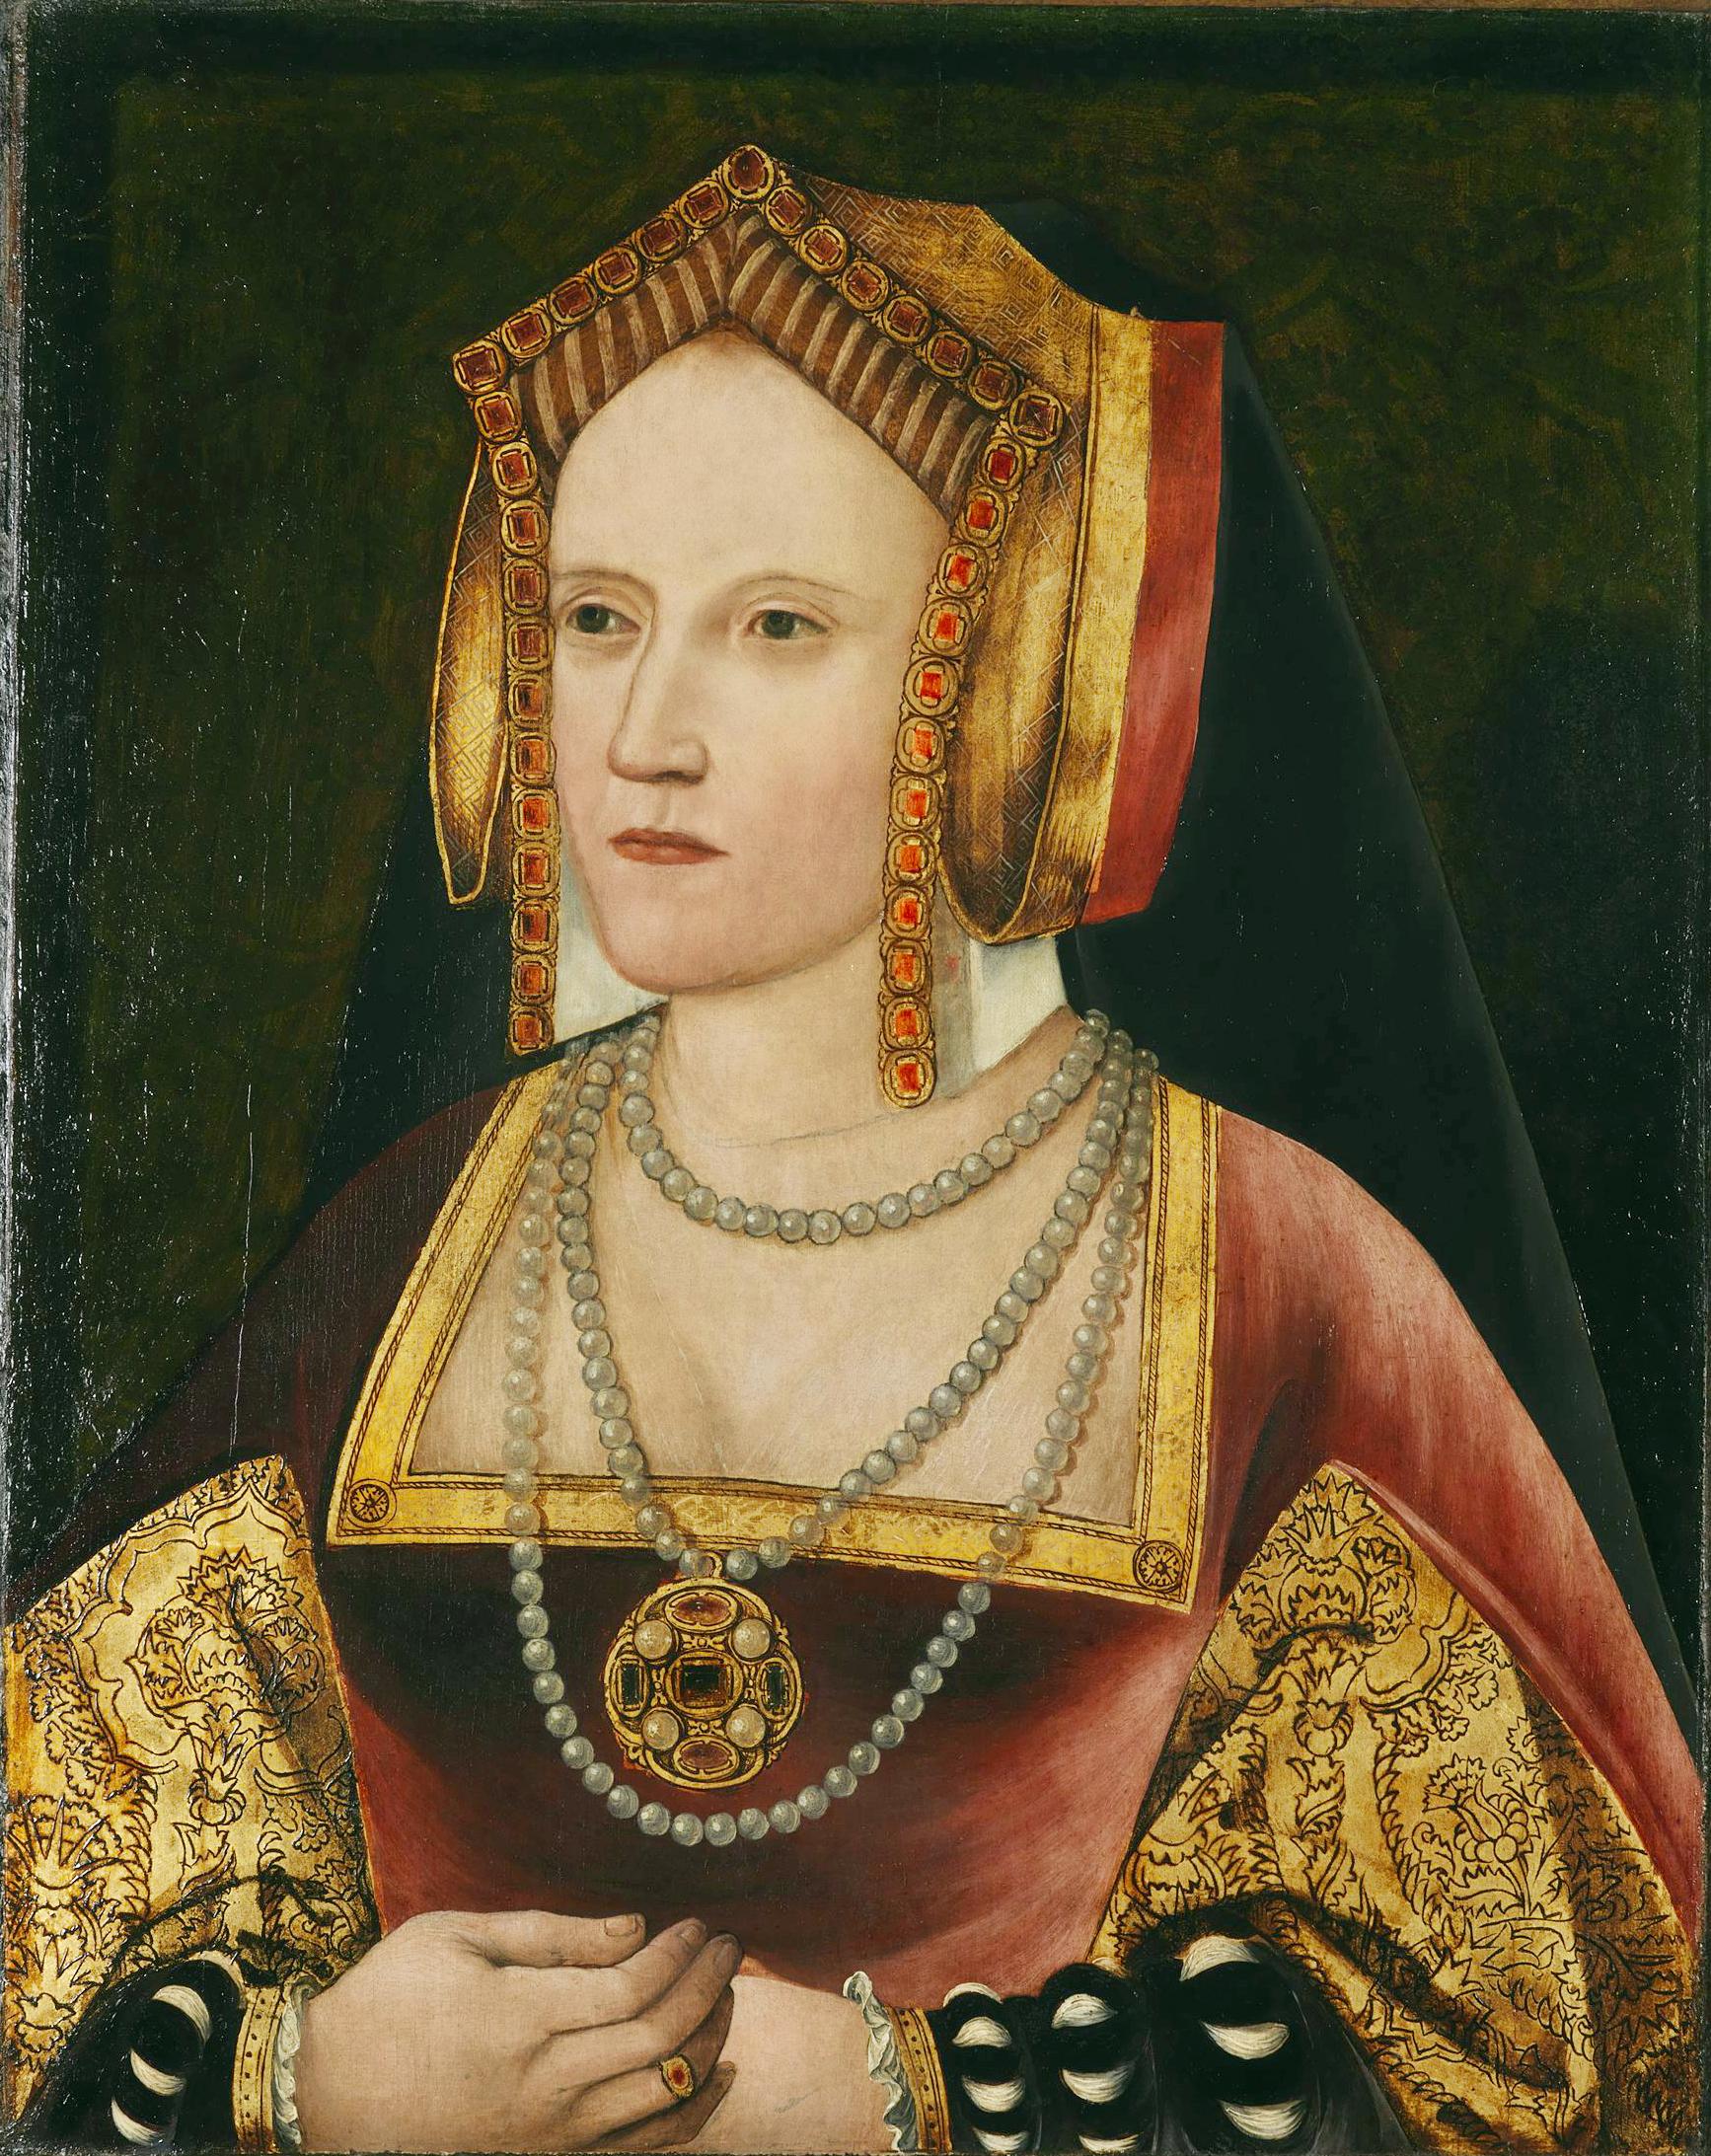 Media Name: Portrait de Catherine d'Aragon